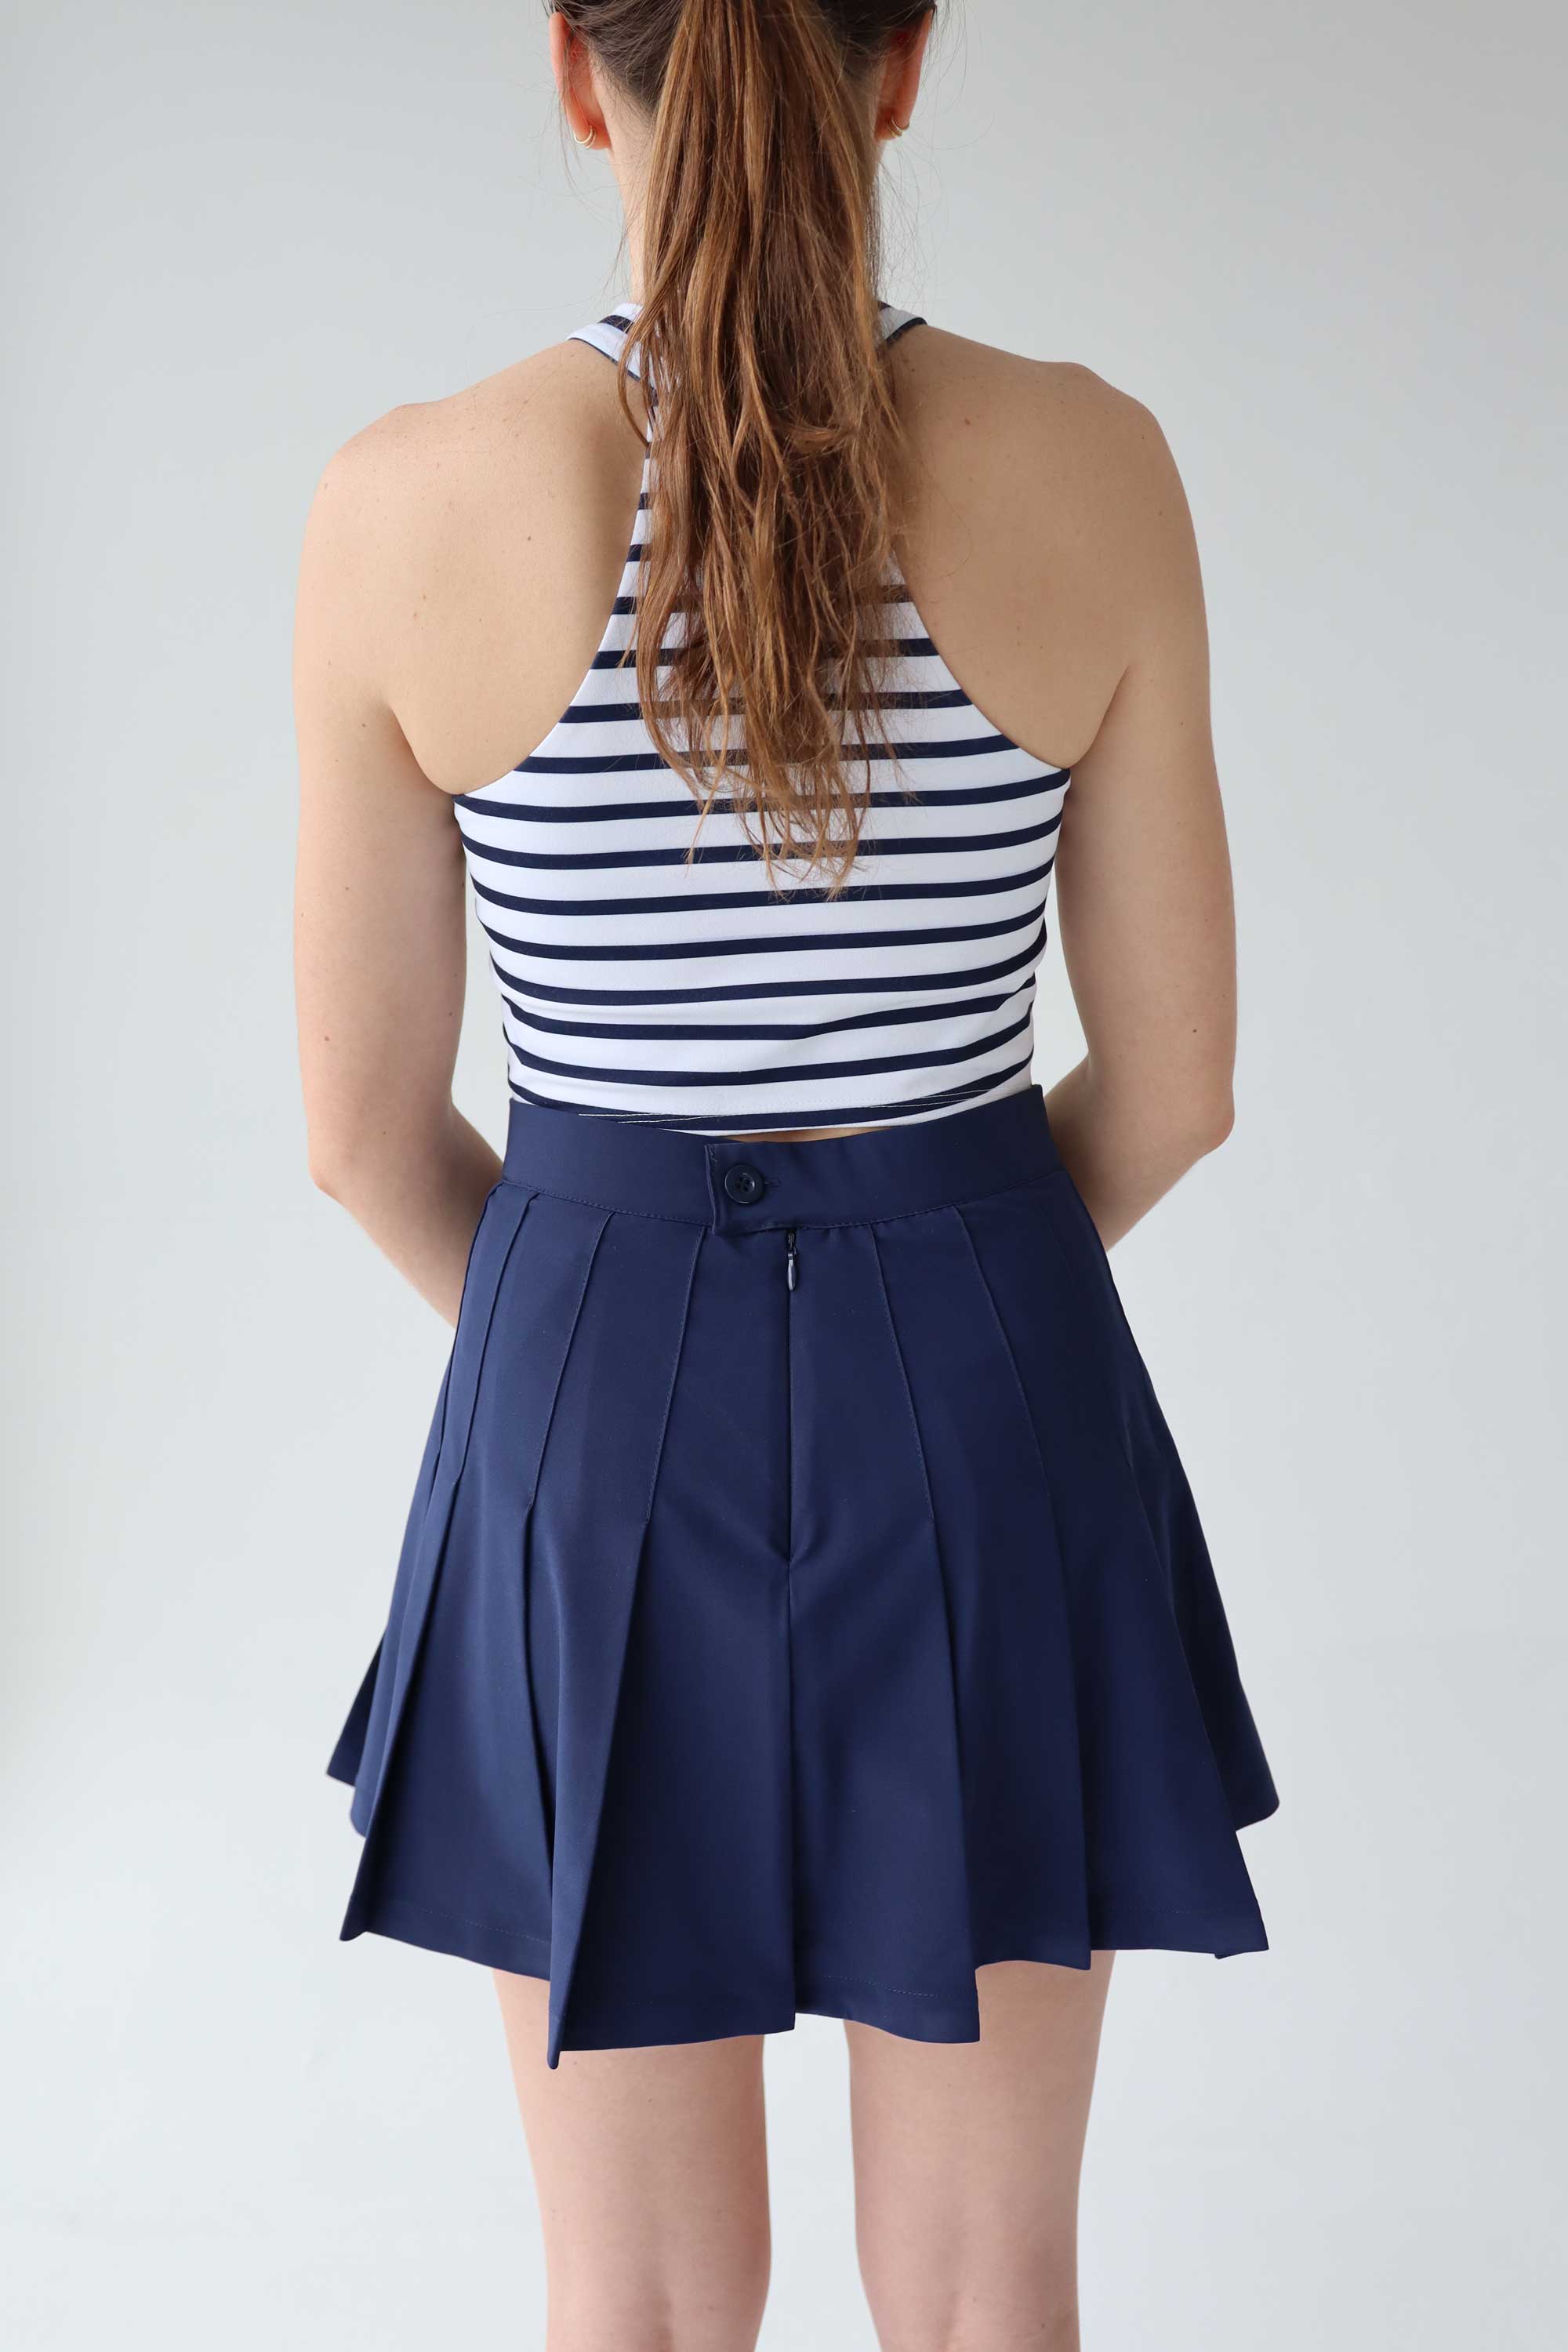 Tennis Skirt - Navy